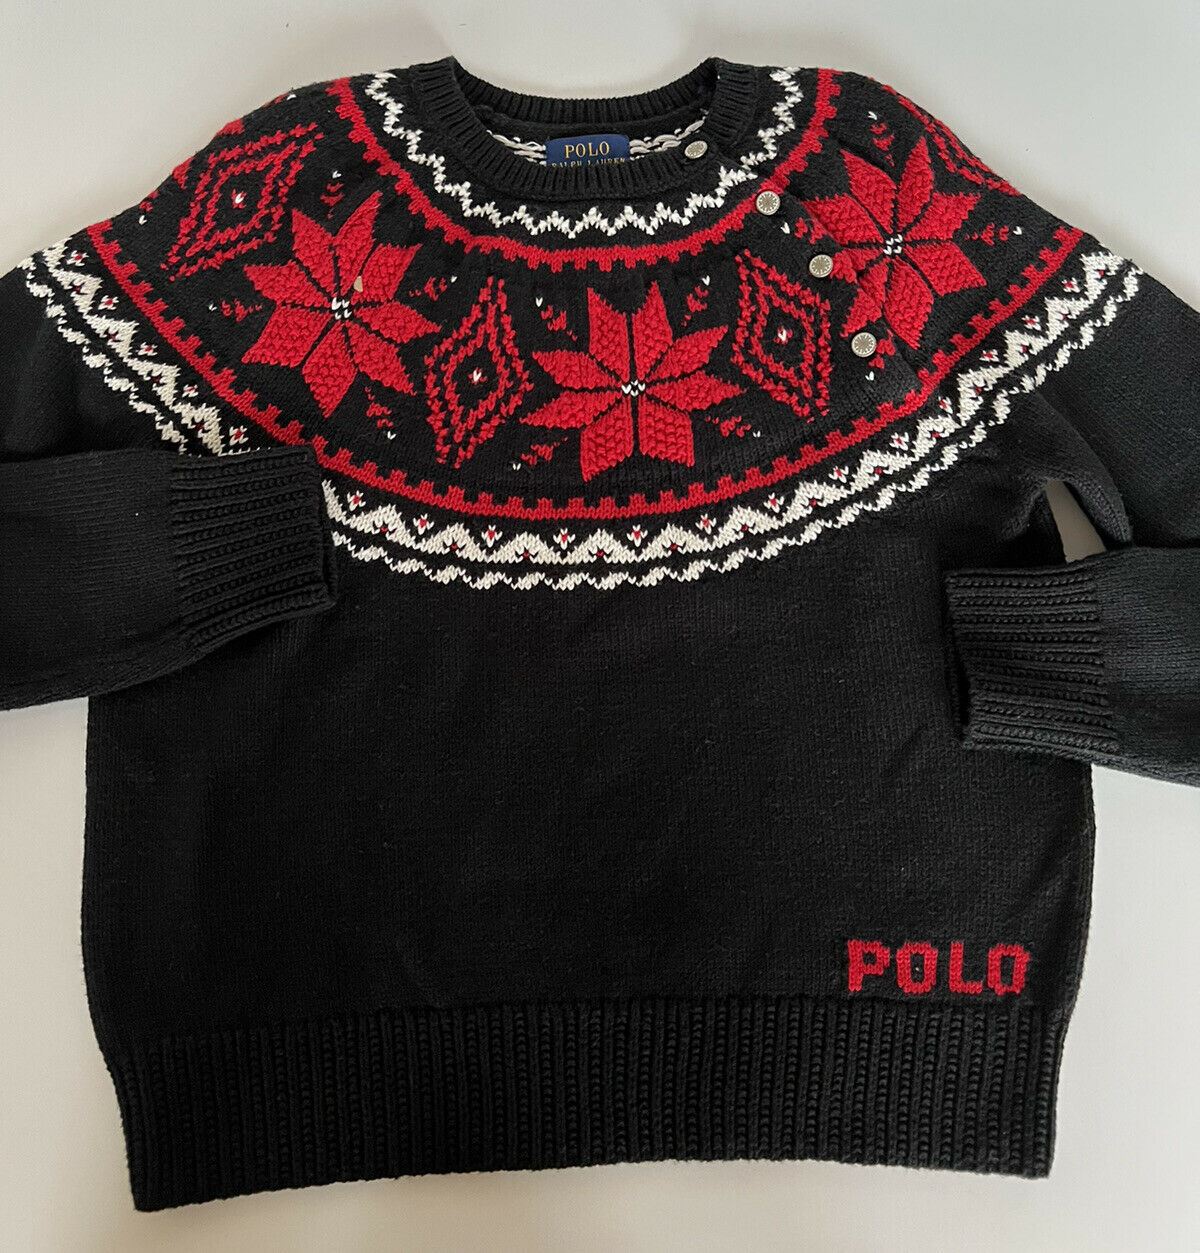 NWT $145 Polo Ralph Lauren Girls Black Let it Snow Cotton Sweater Size L (12-14)